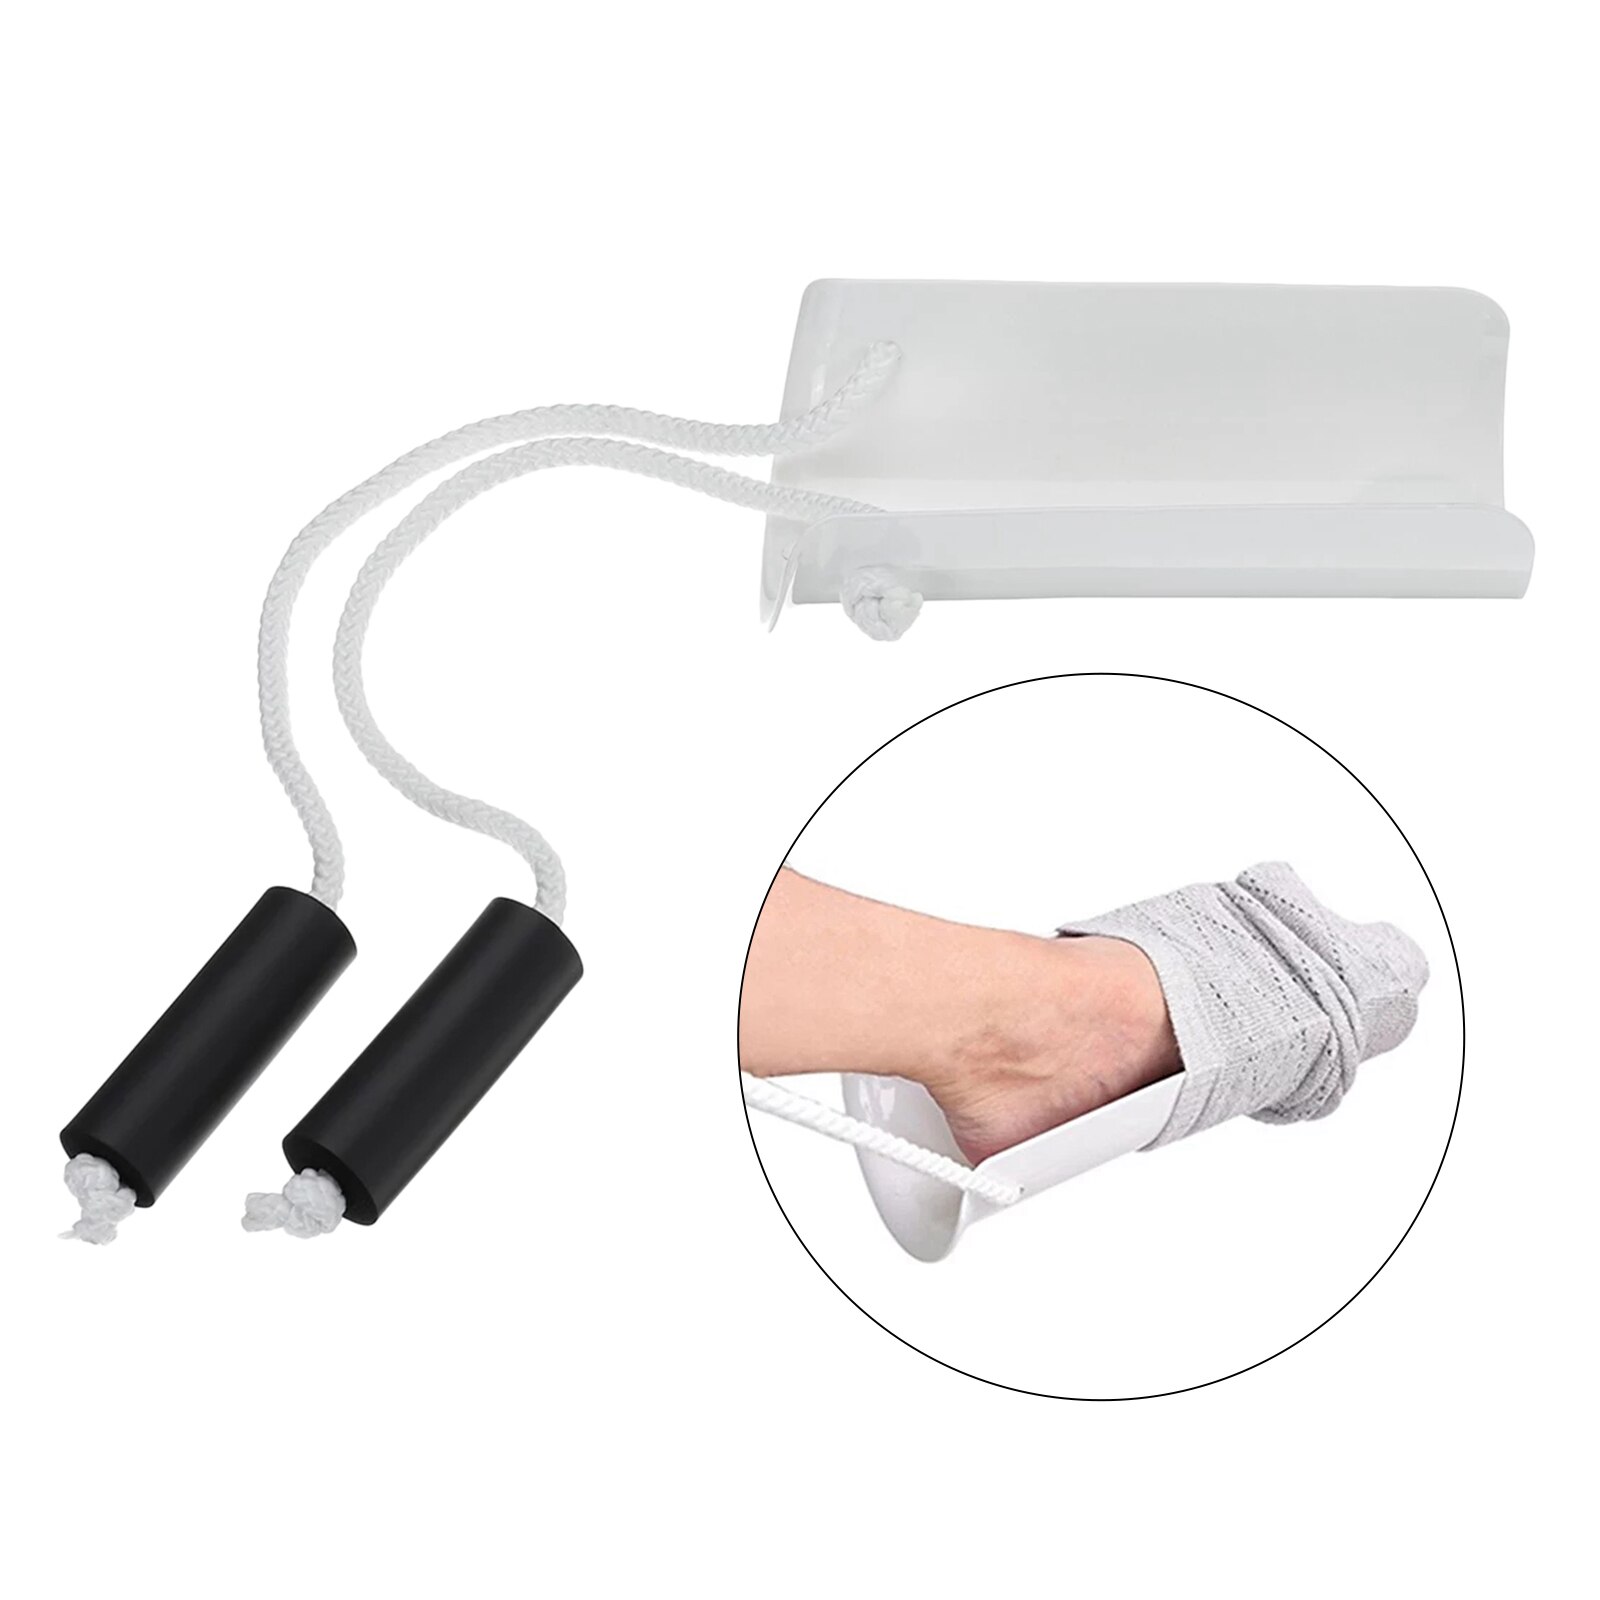 Flexibele Sok Aid Apparaat Compressie Sok Helper Aids Tool Kit Met Antislip Foam Handvatten